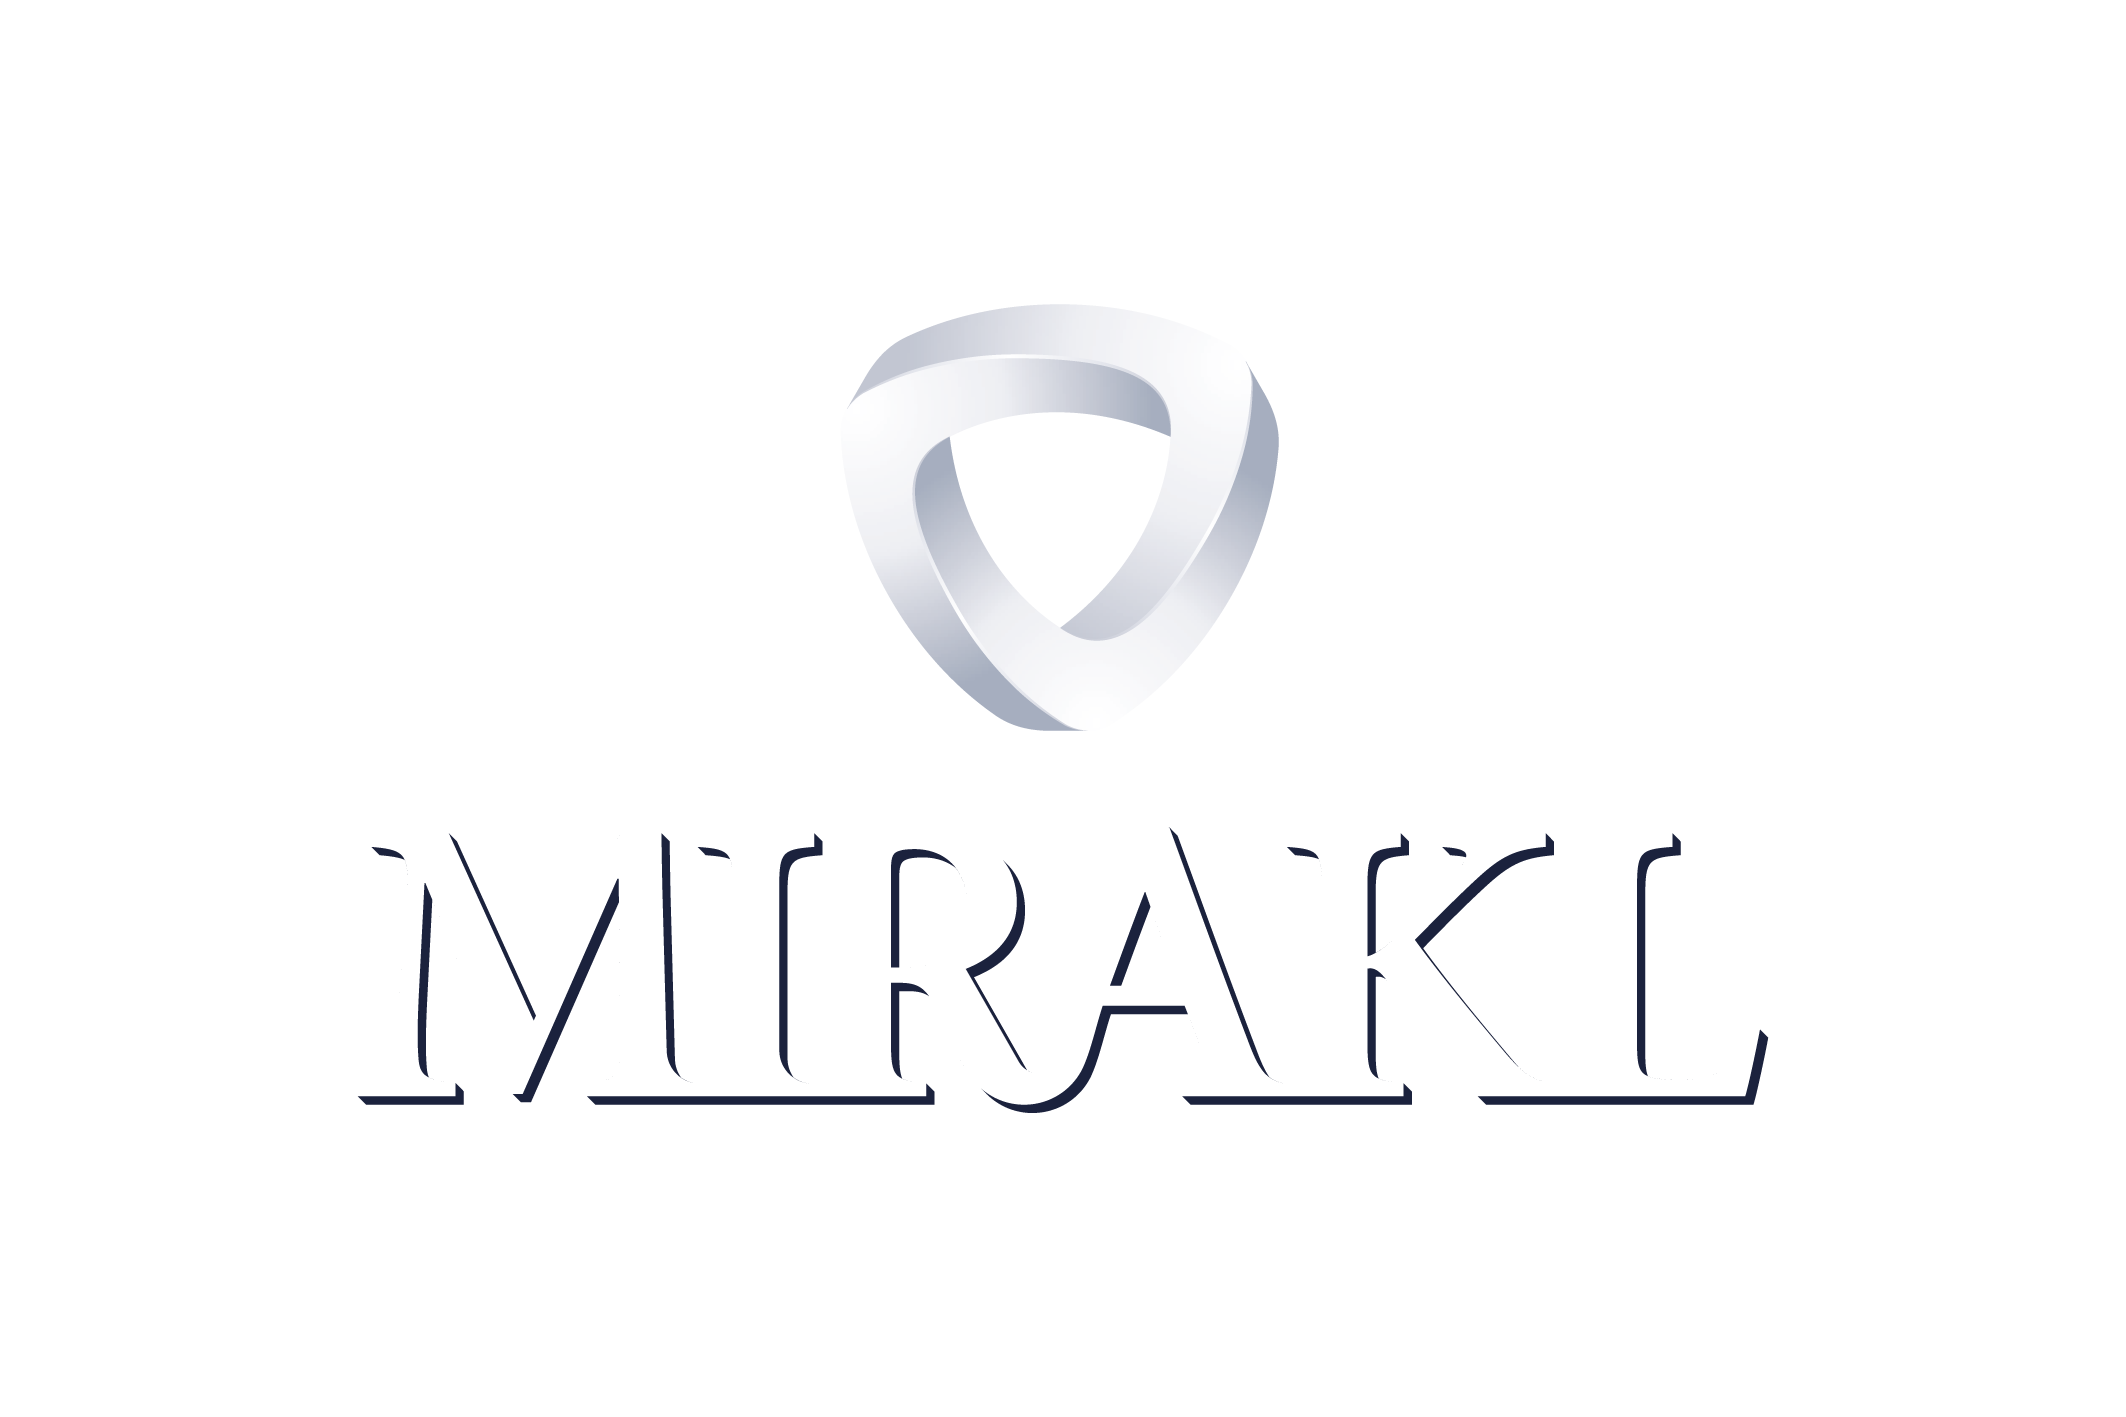 mirakl logo